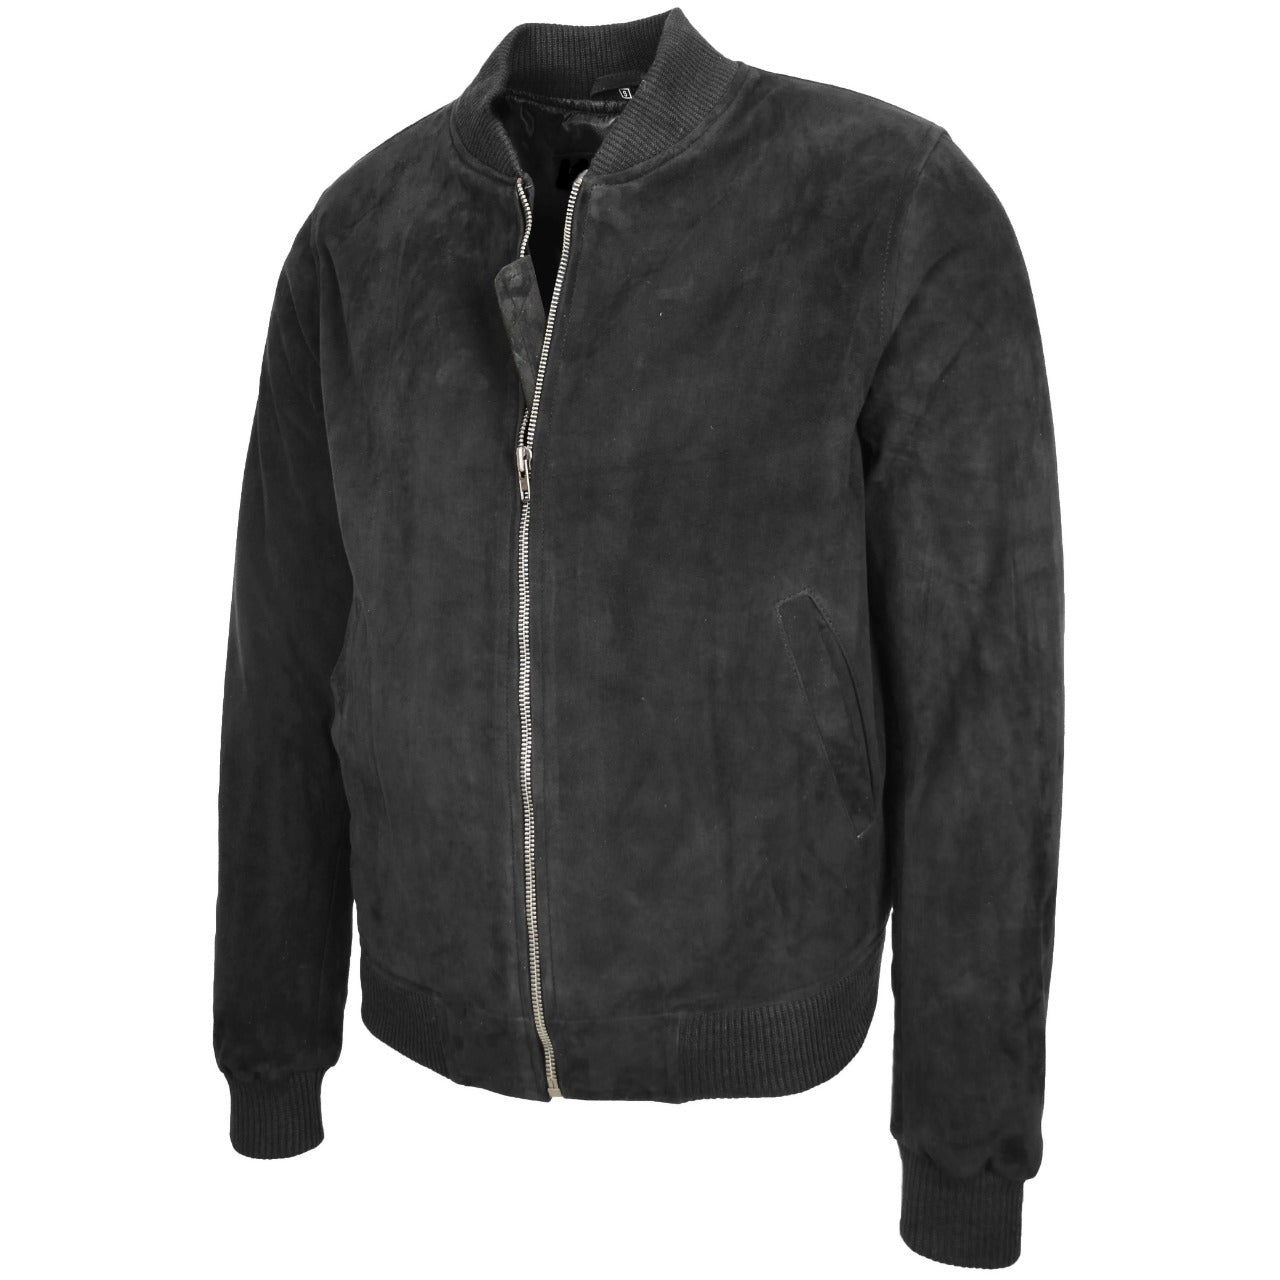 A2 Bomber Men's Black Suede Leather Jacket